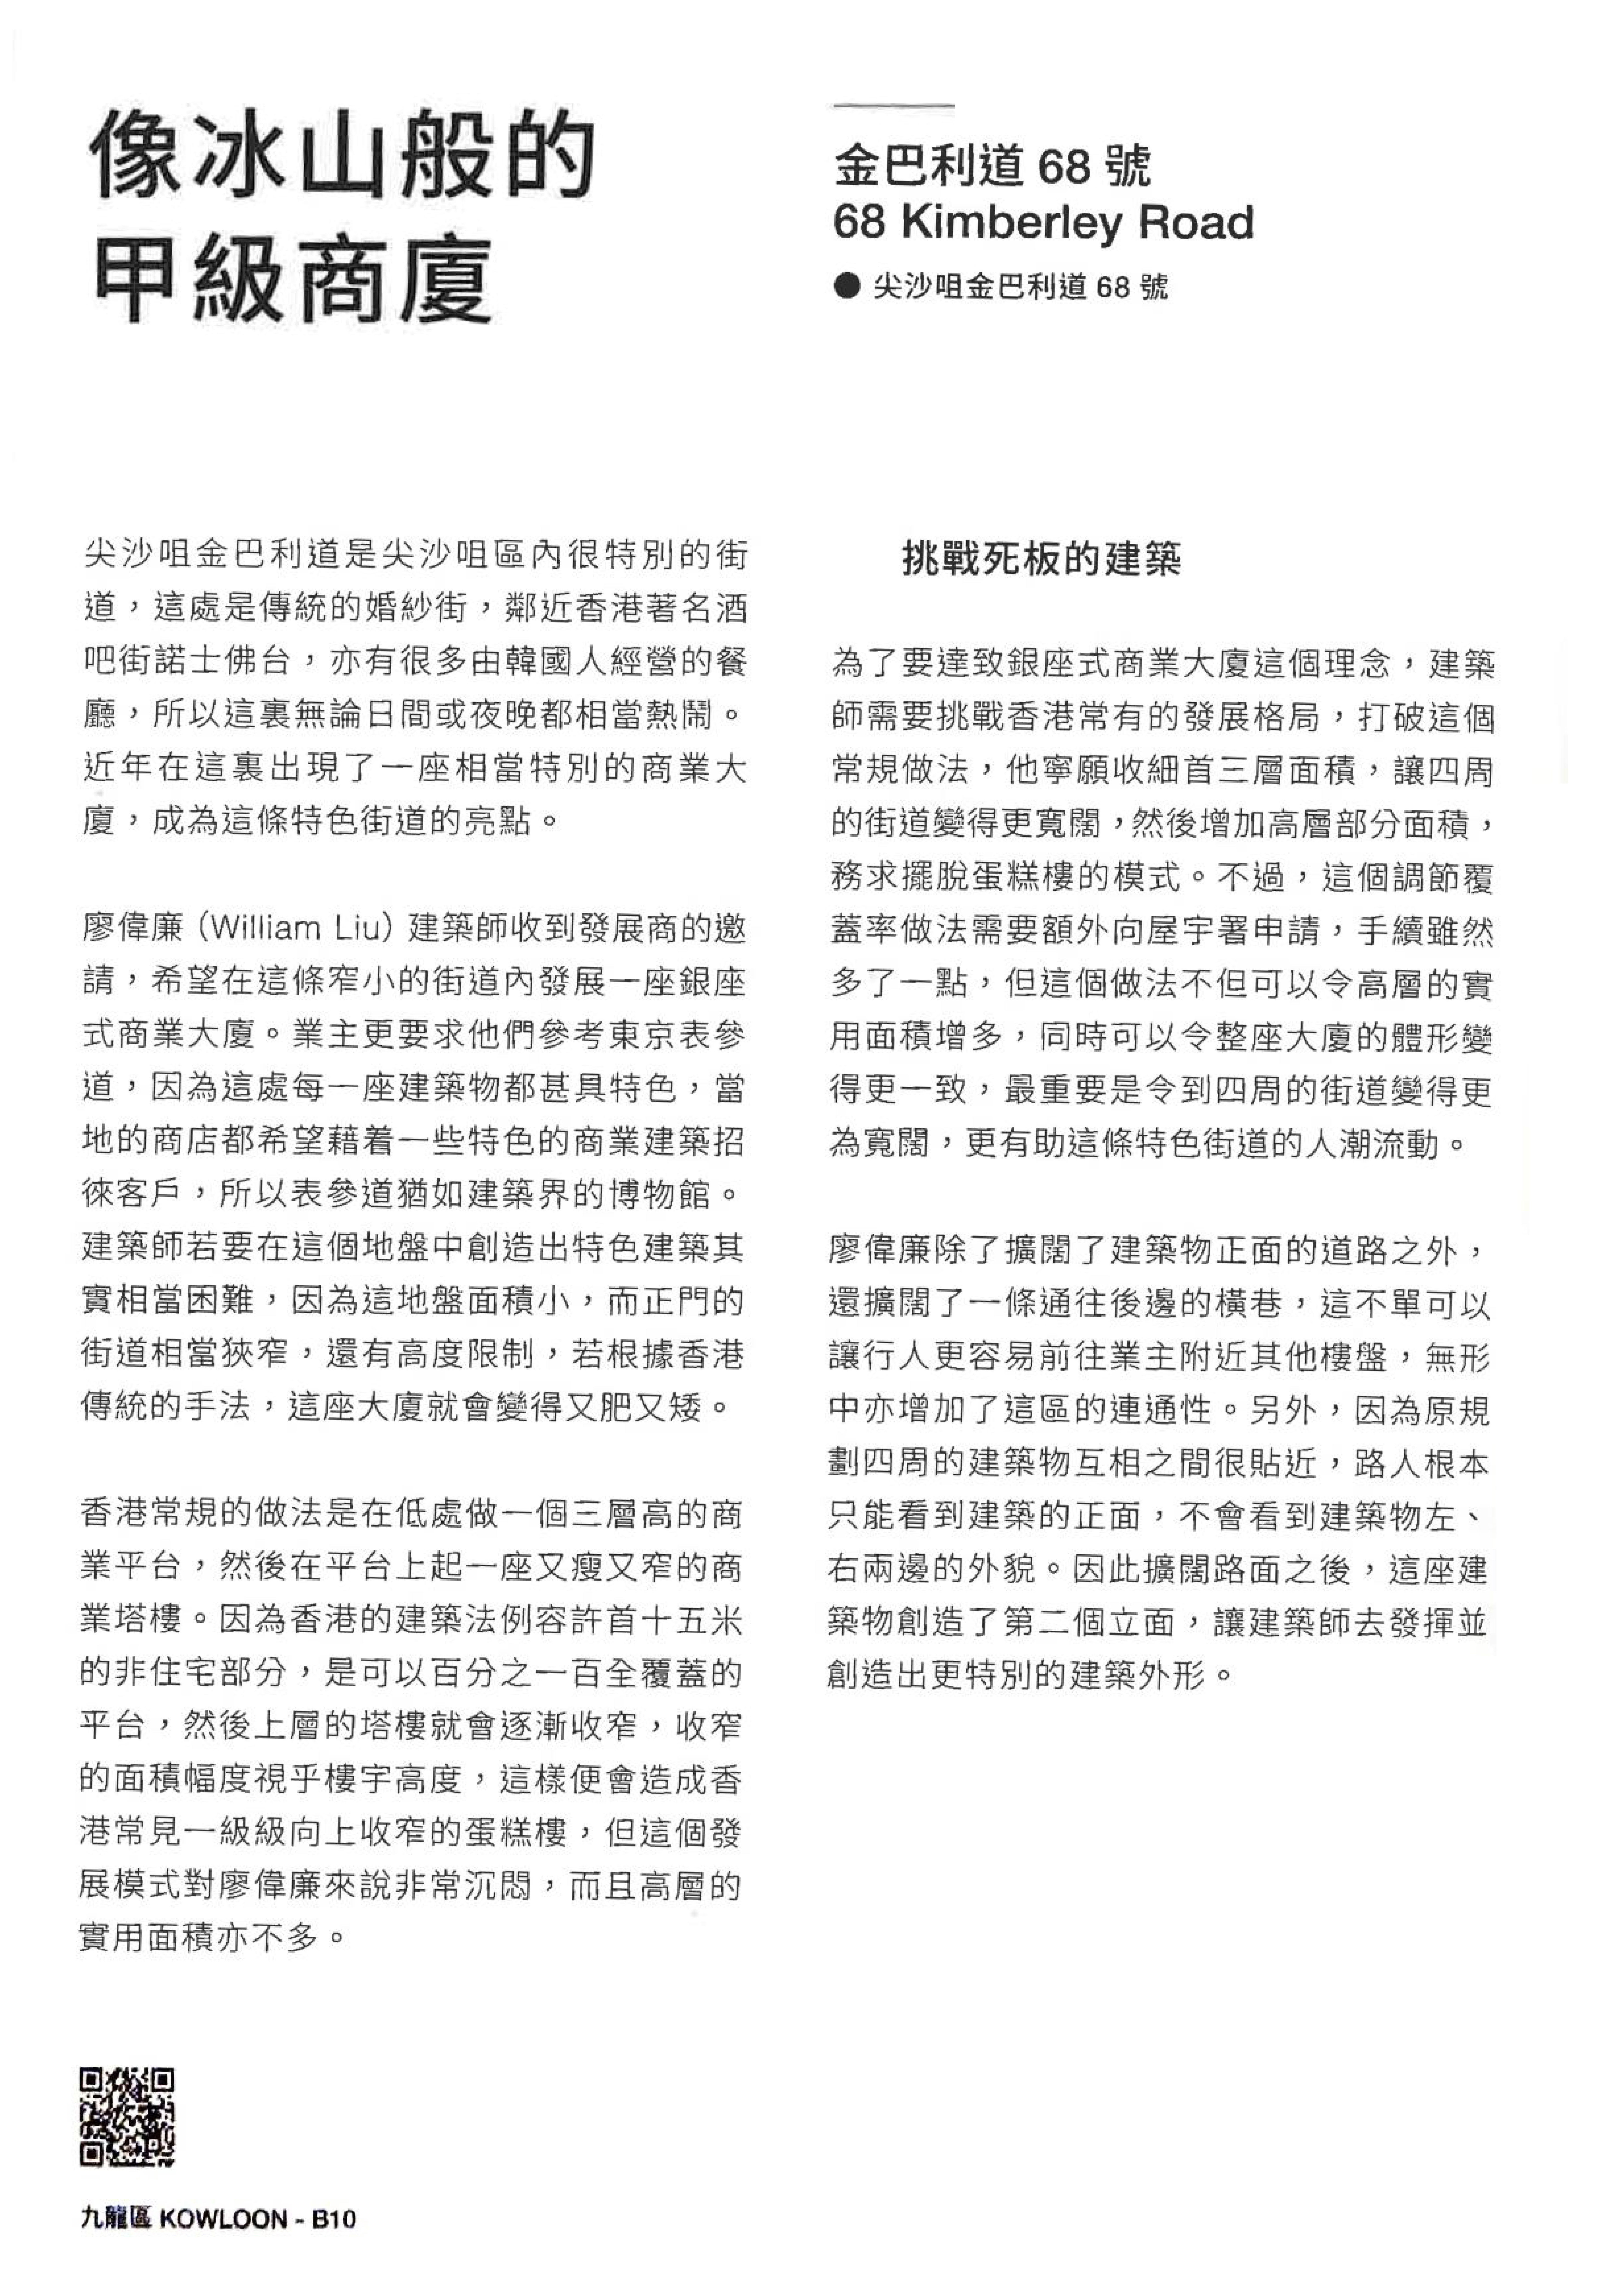 Publication of ‘Architecture Touch: Hong Kong’ 《築覺VI：築遊香港》